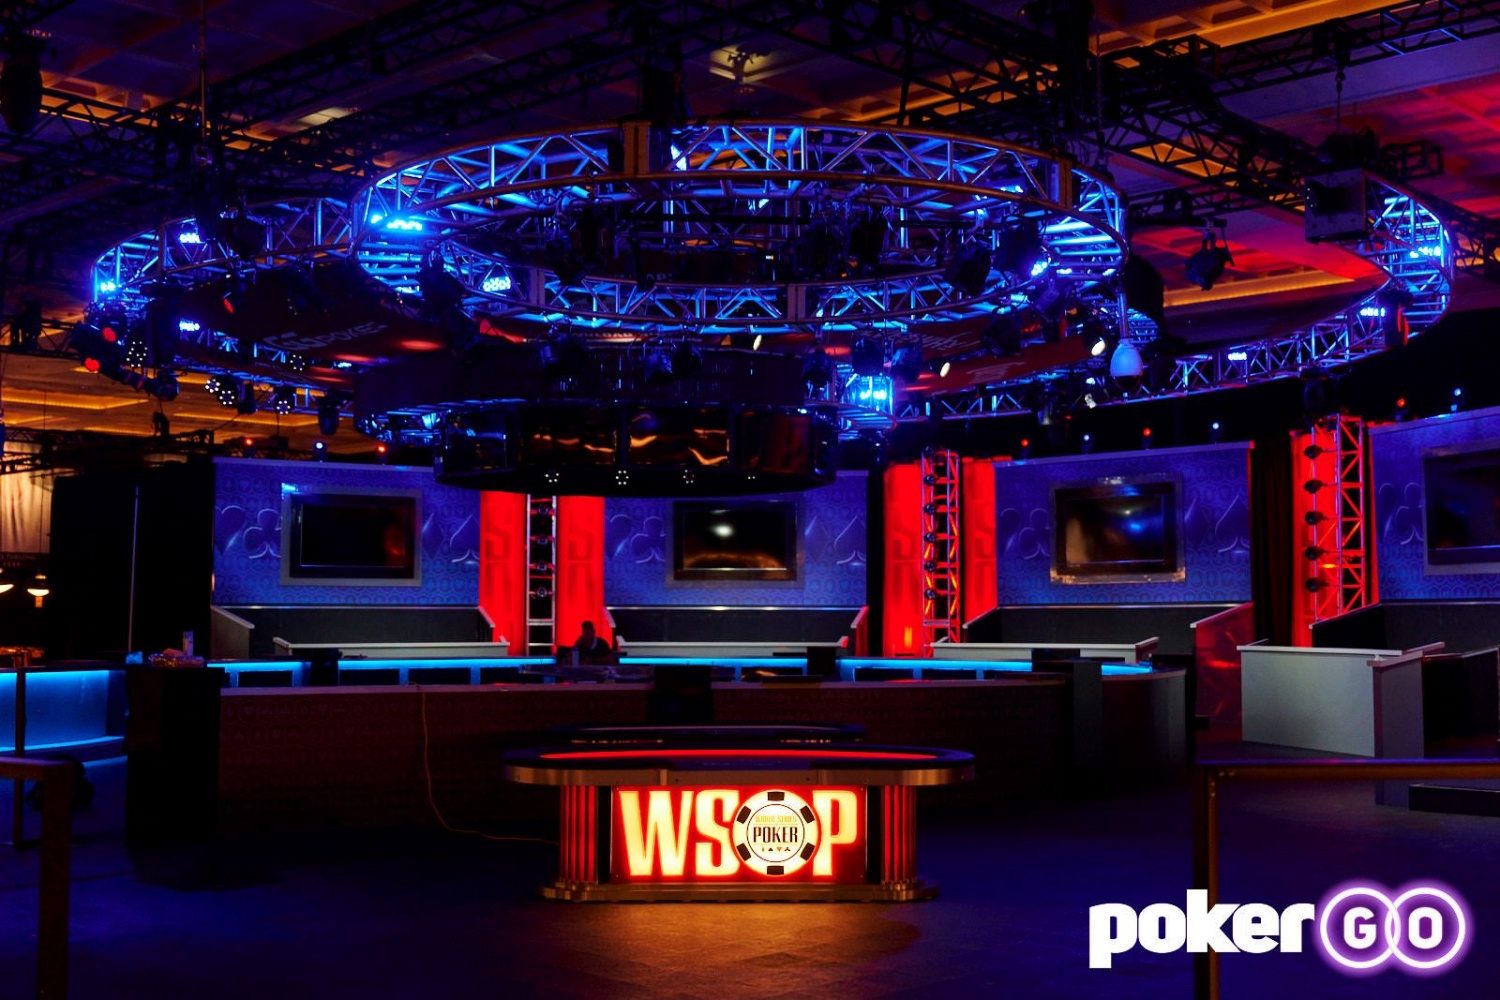 WSOP Poker Go